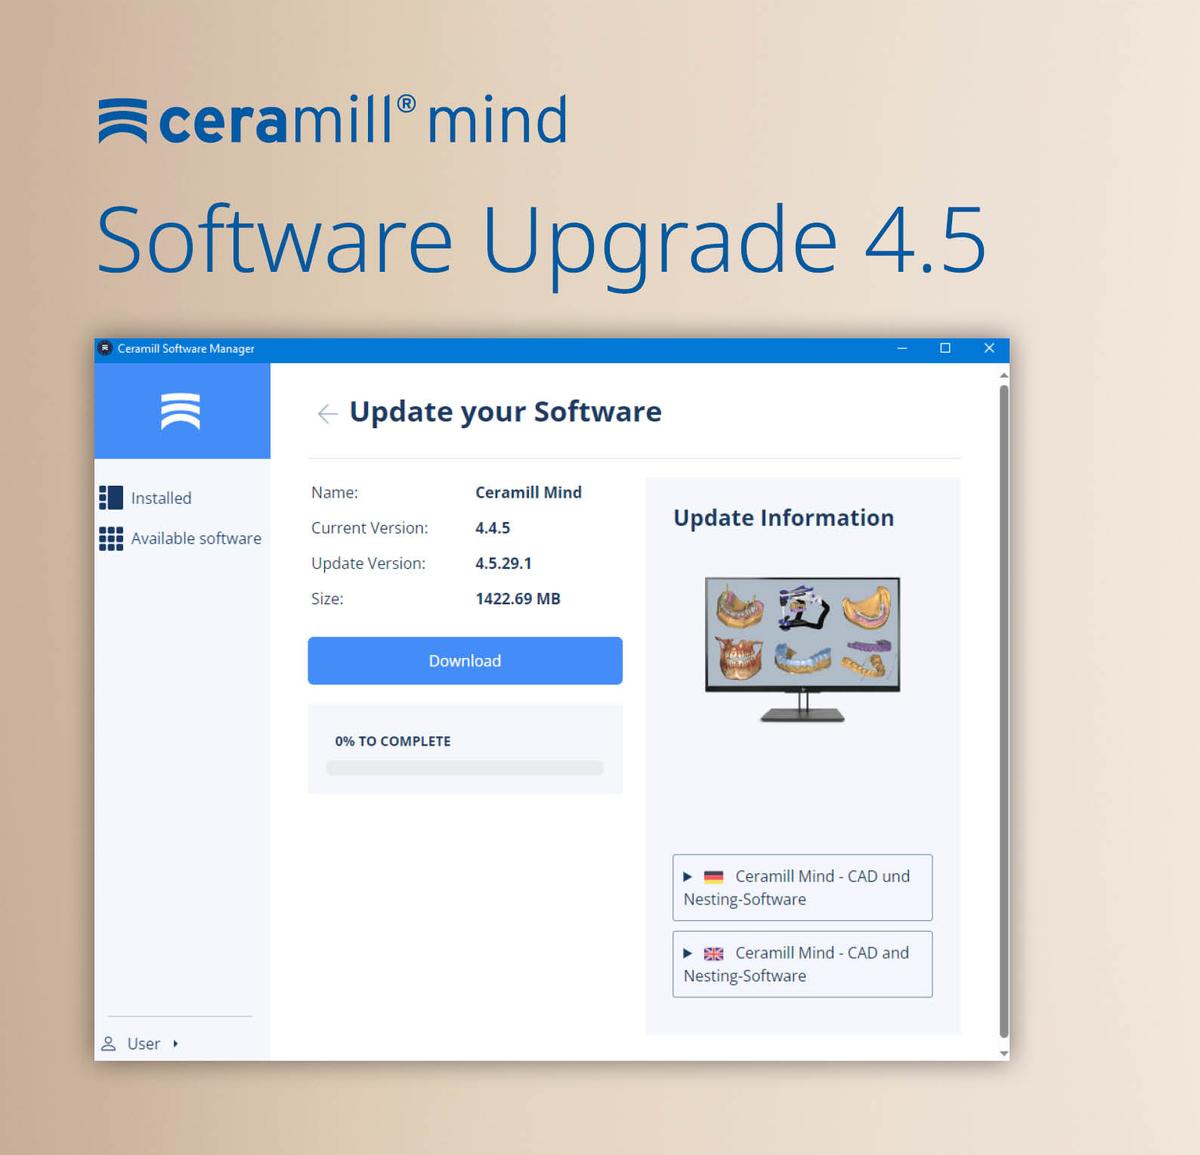 Ceramill Software Upgrade 4.5 available